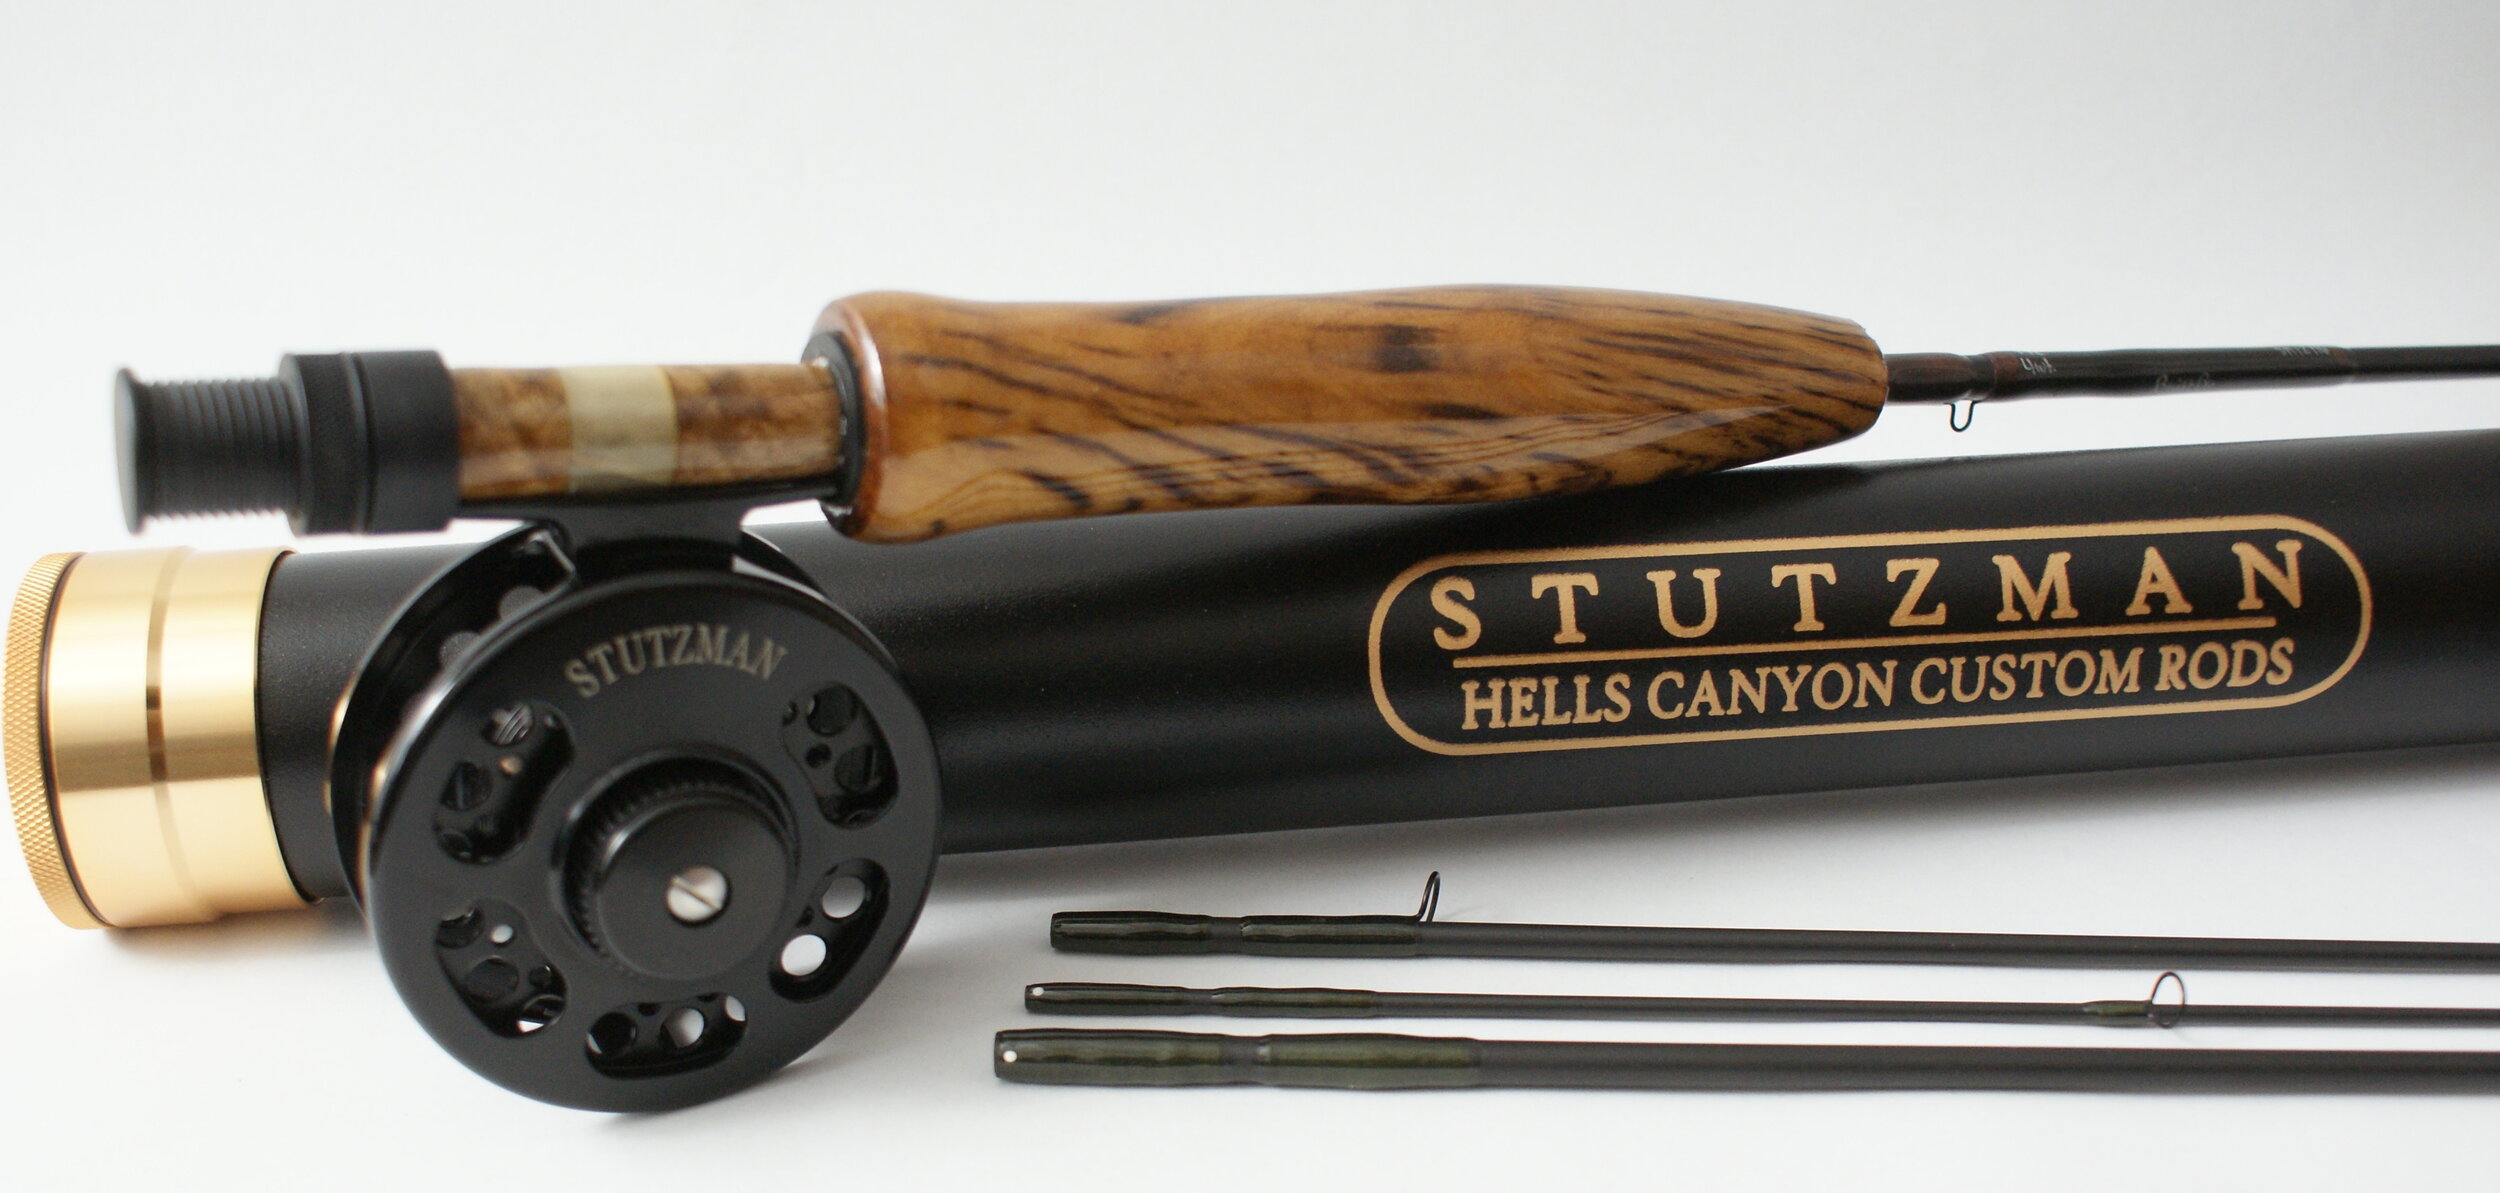 Stutzman Custom Fishing Rods and Walking Staffs